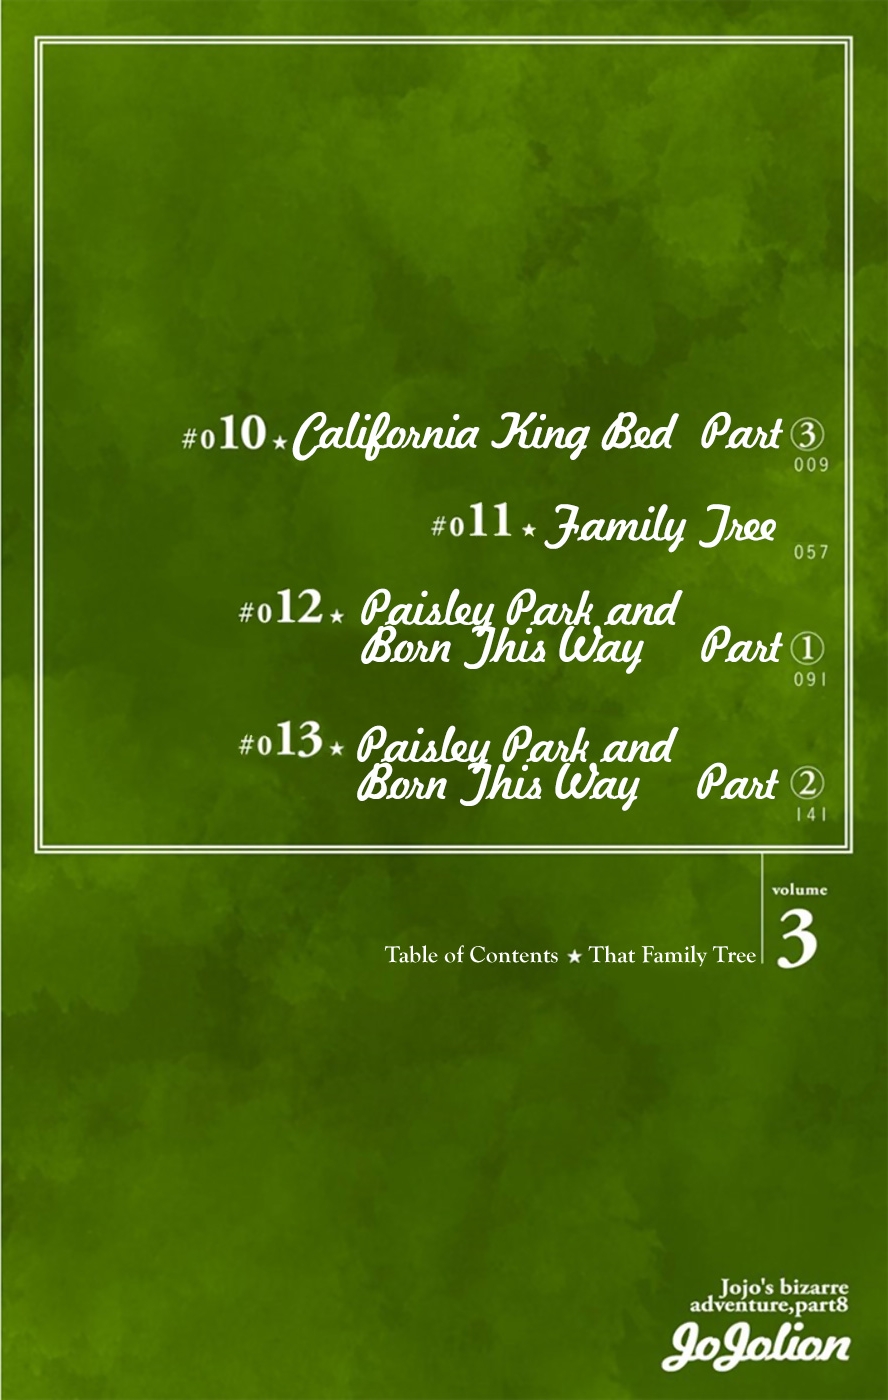 JoJo's Bizarre Adventure Part 8 JoJolion [Official Colored] Vol. 3 Ch. 10 California King Bed Part 3